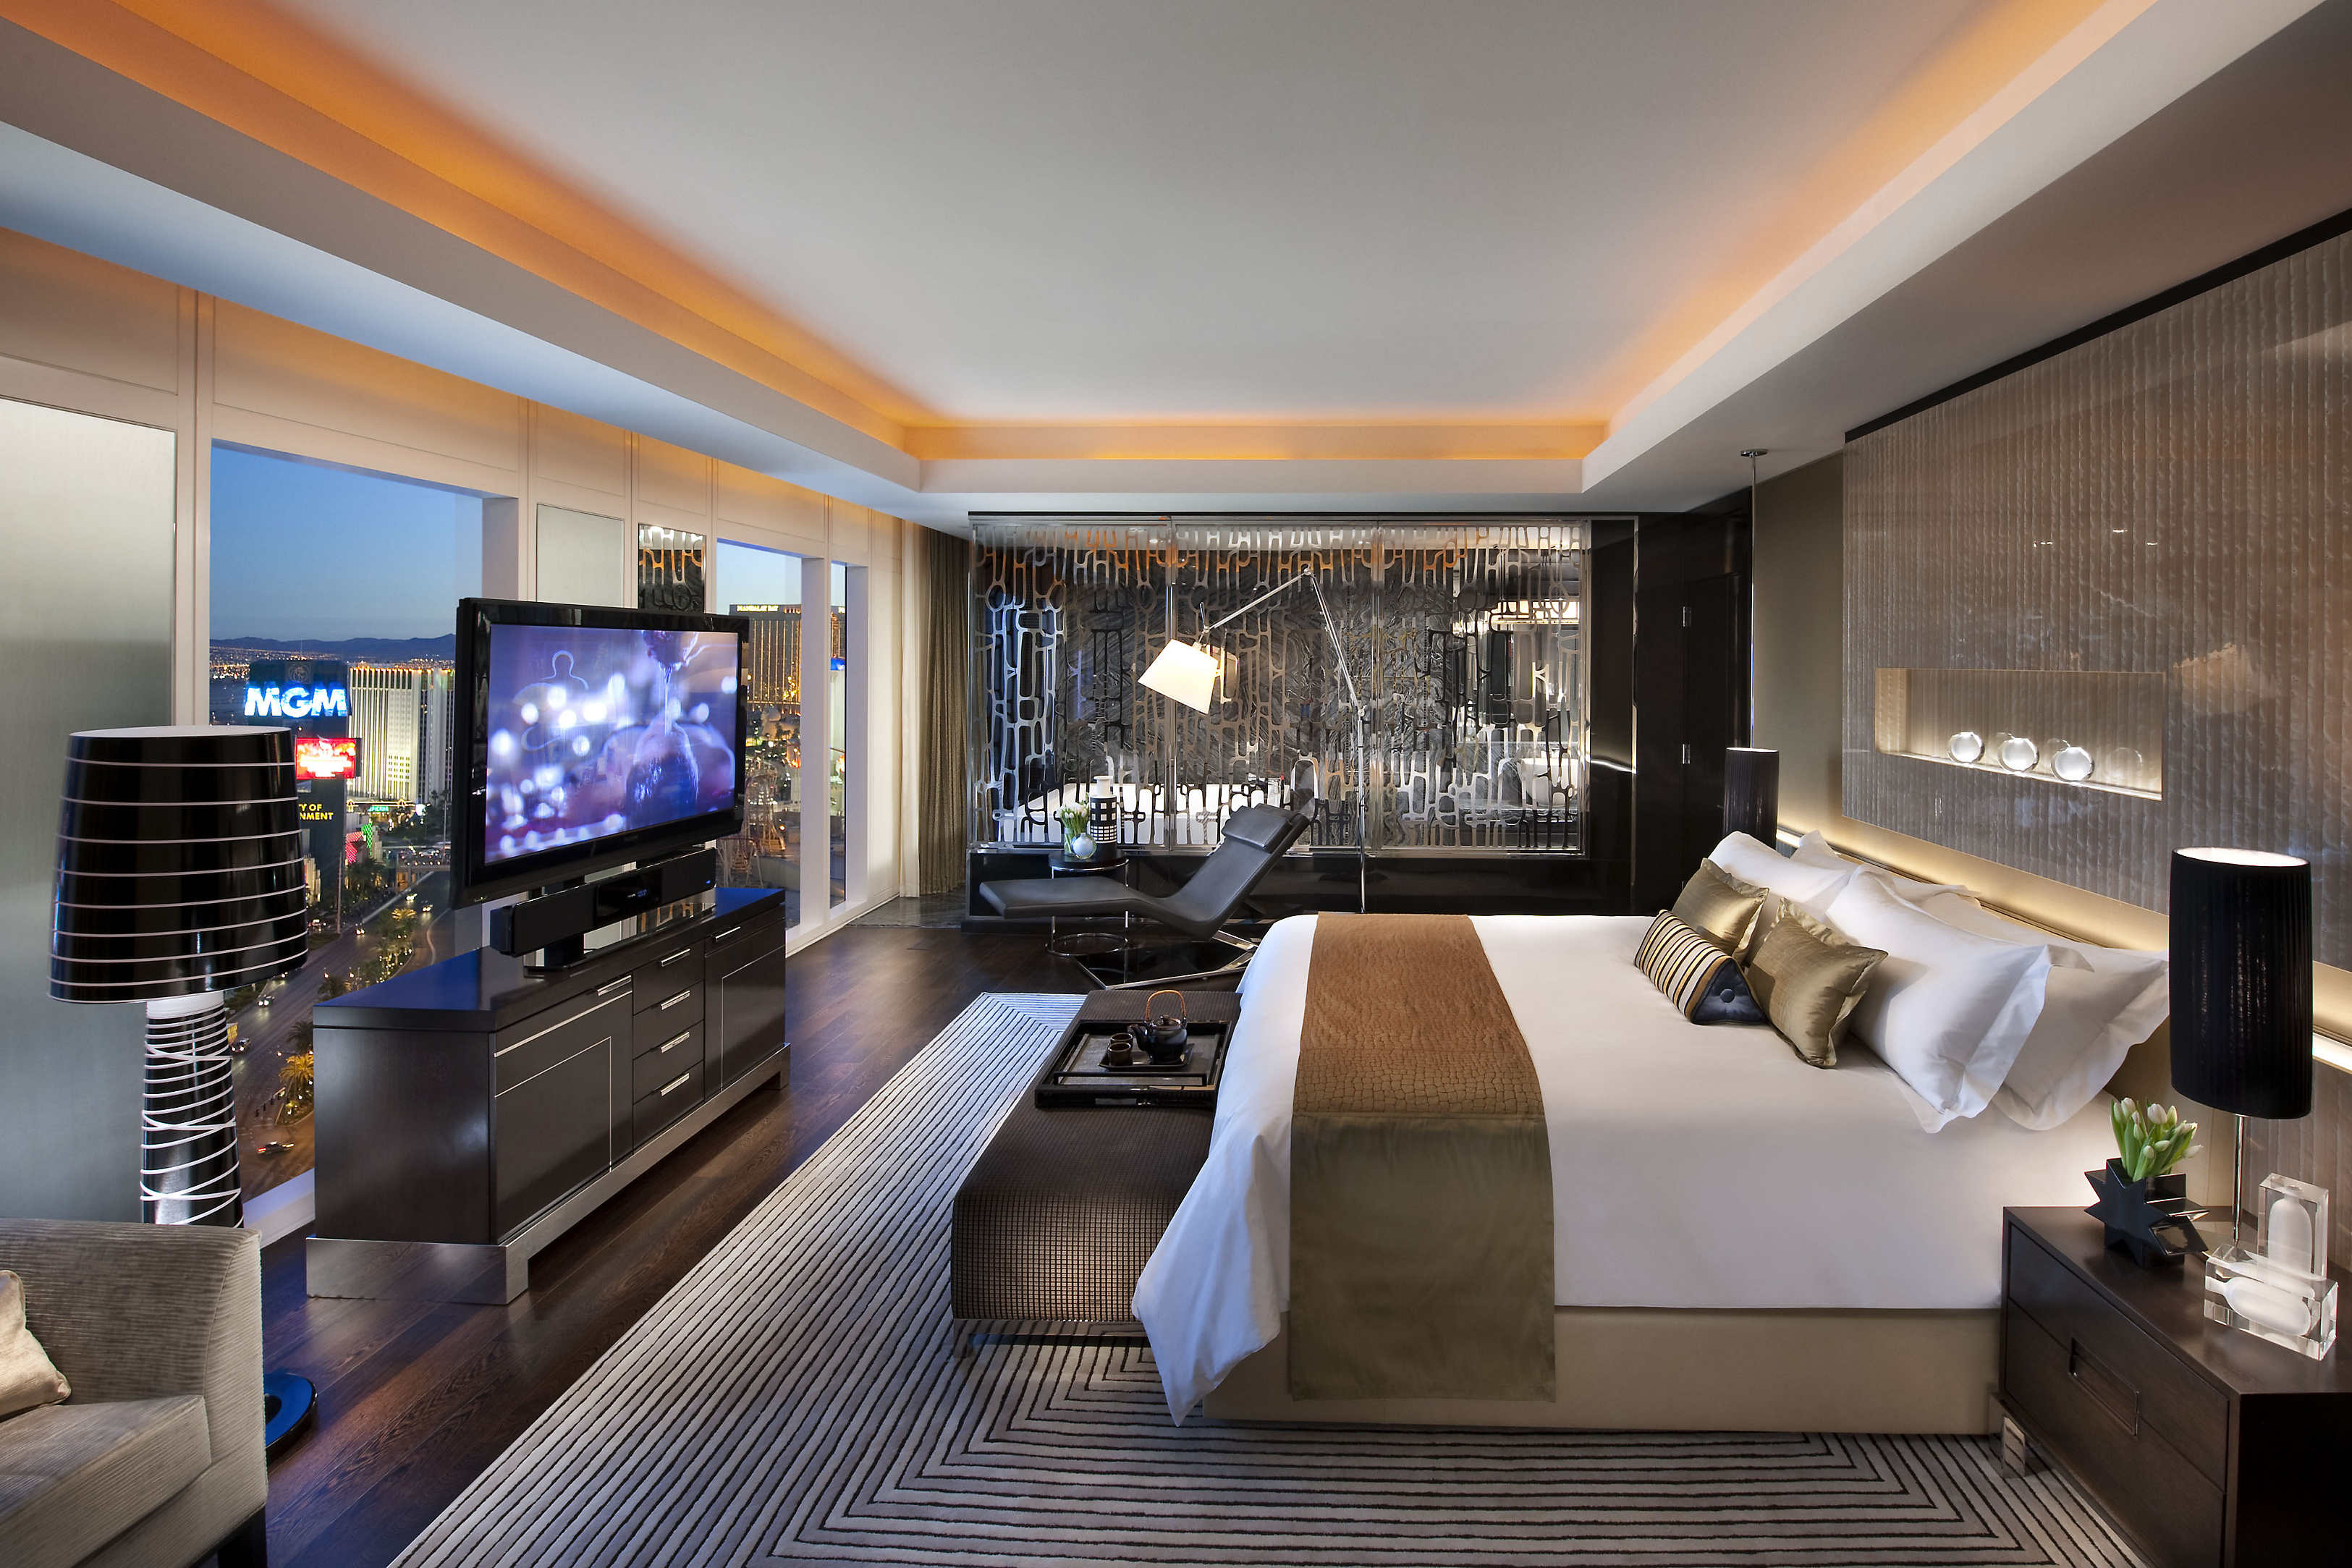 Luxury hotel in Las Vegas, Nevada – Mandarin Oriental | Best Travel Tips